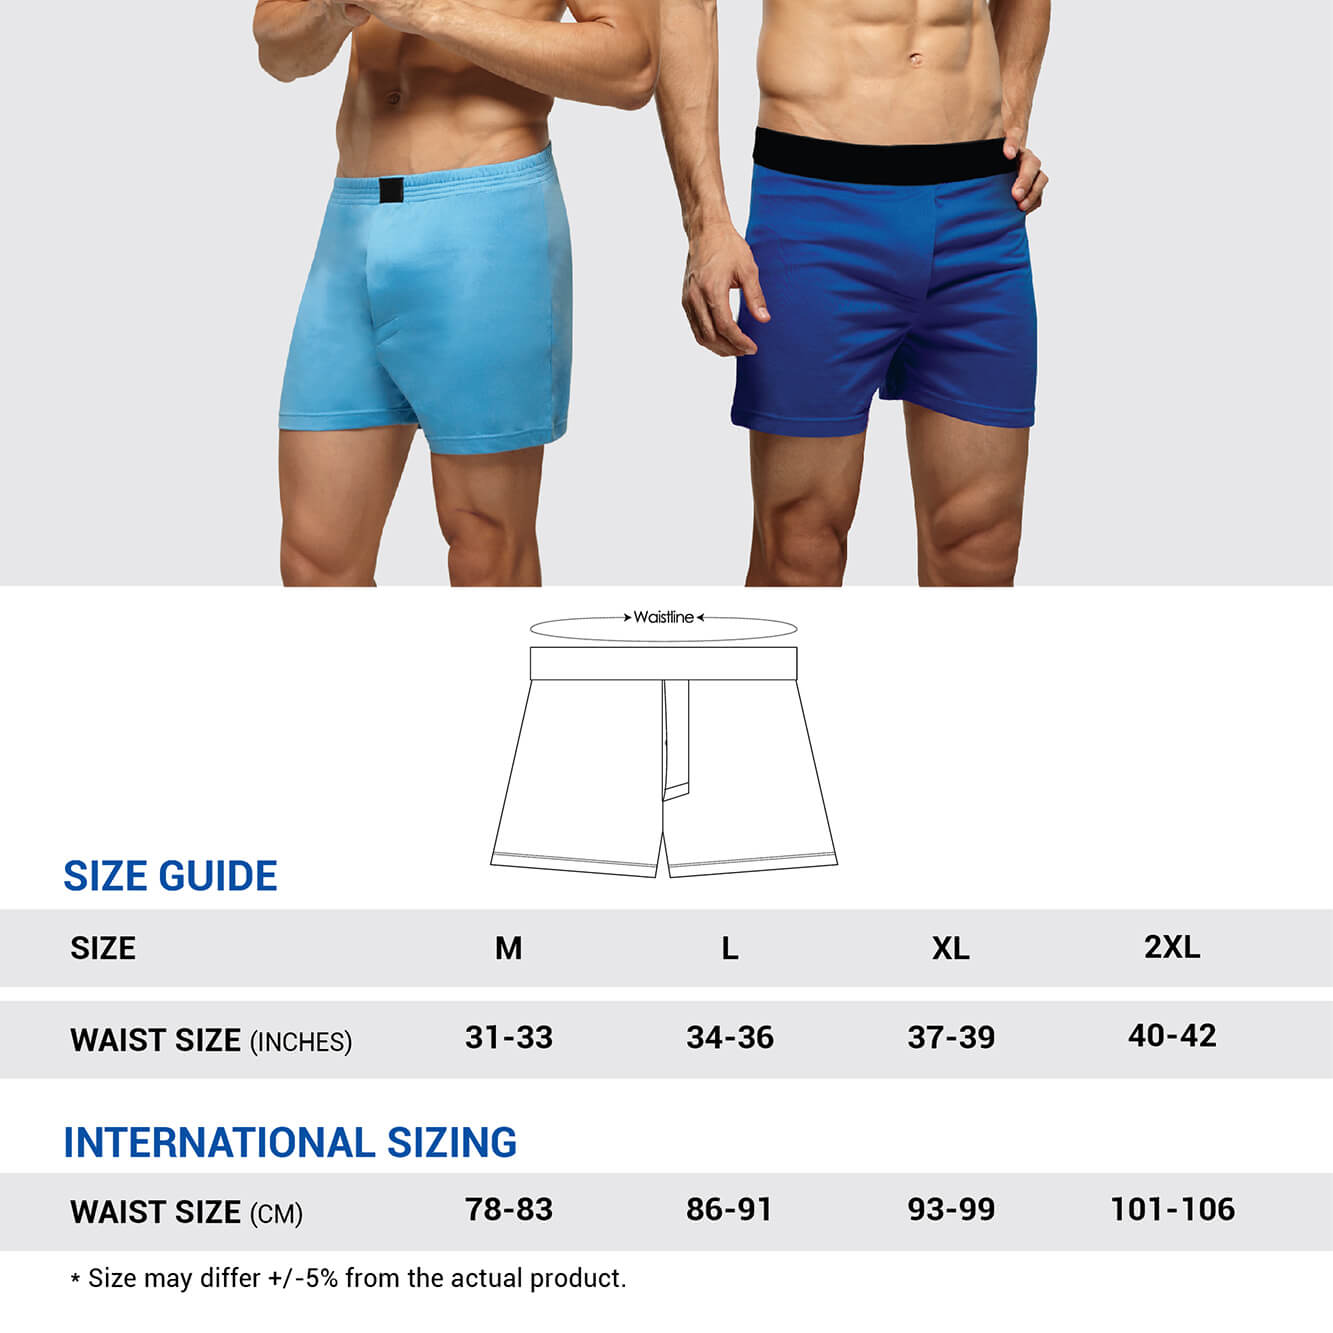 Boxer size chart